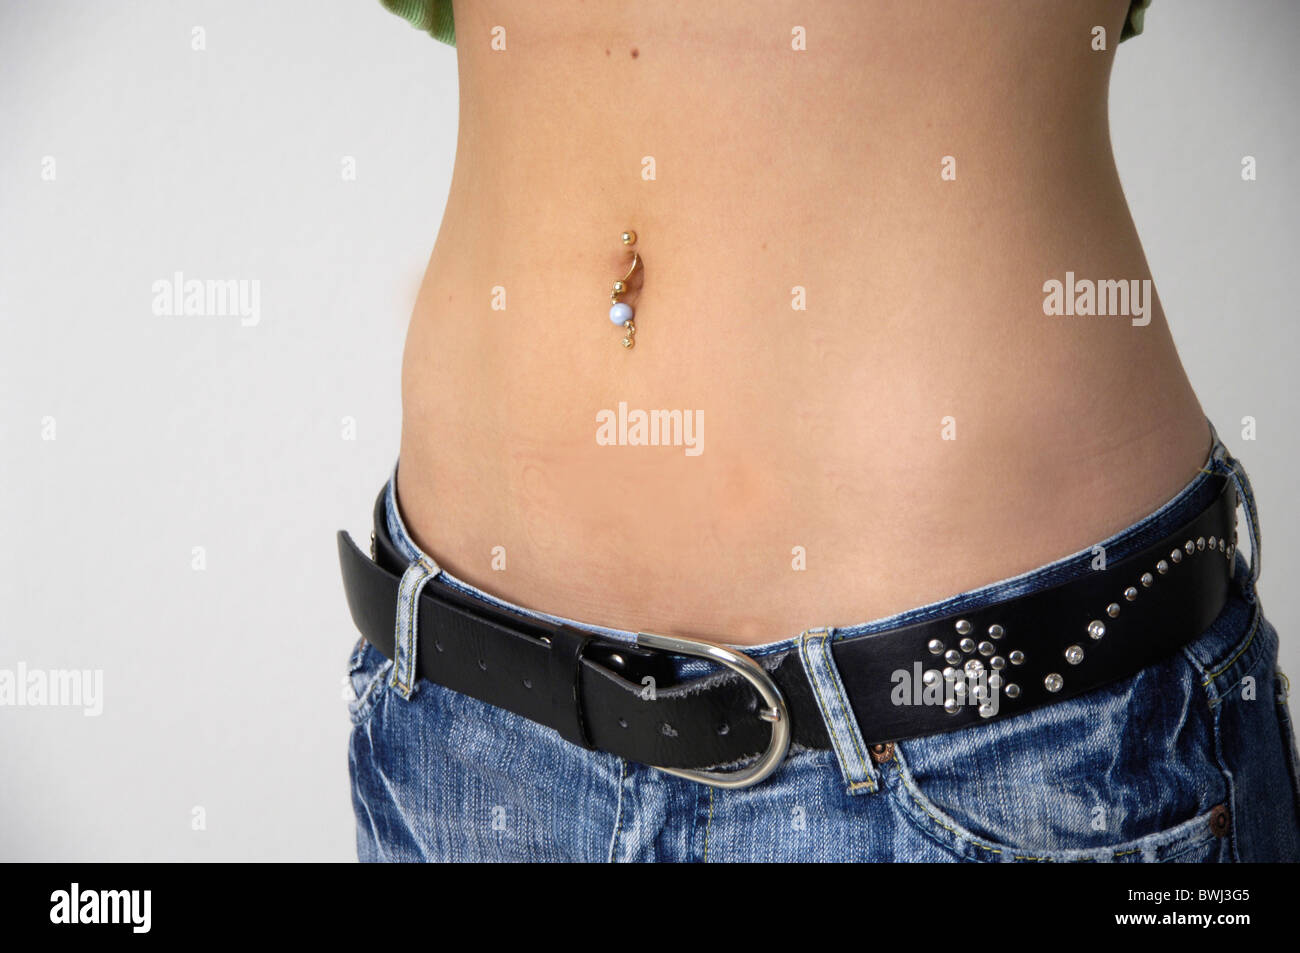 Woman Body Detail Belly Piercing Bellybutton Belly Button Piercing for Hip Piercing Jewelry